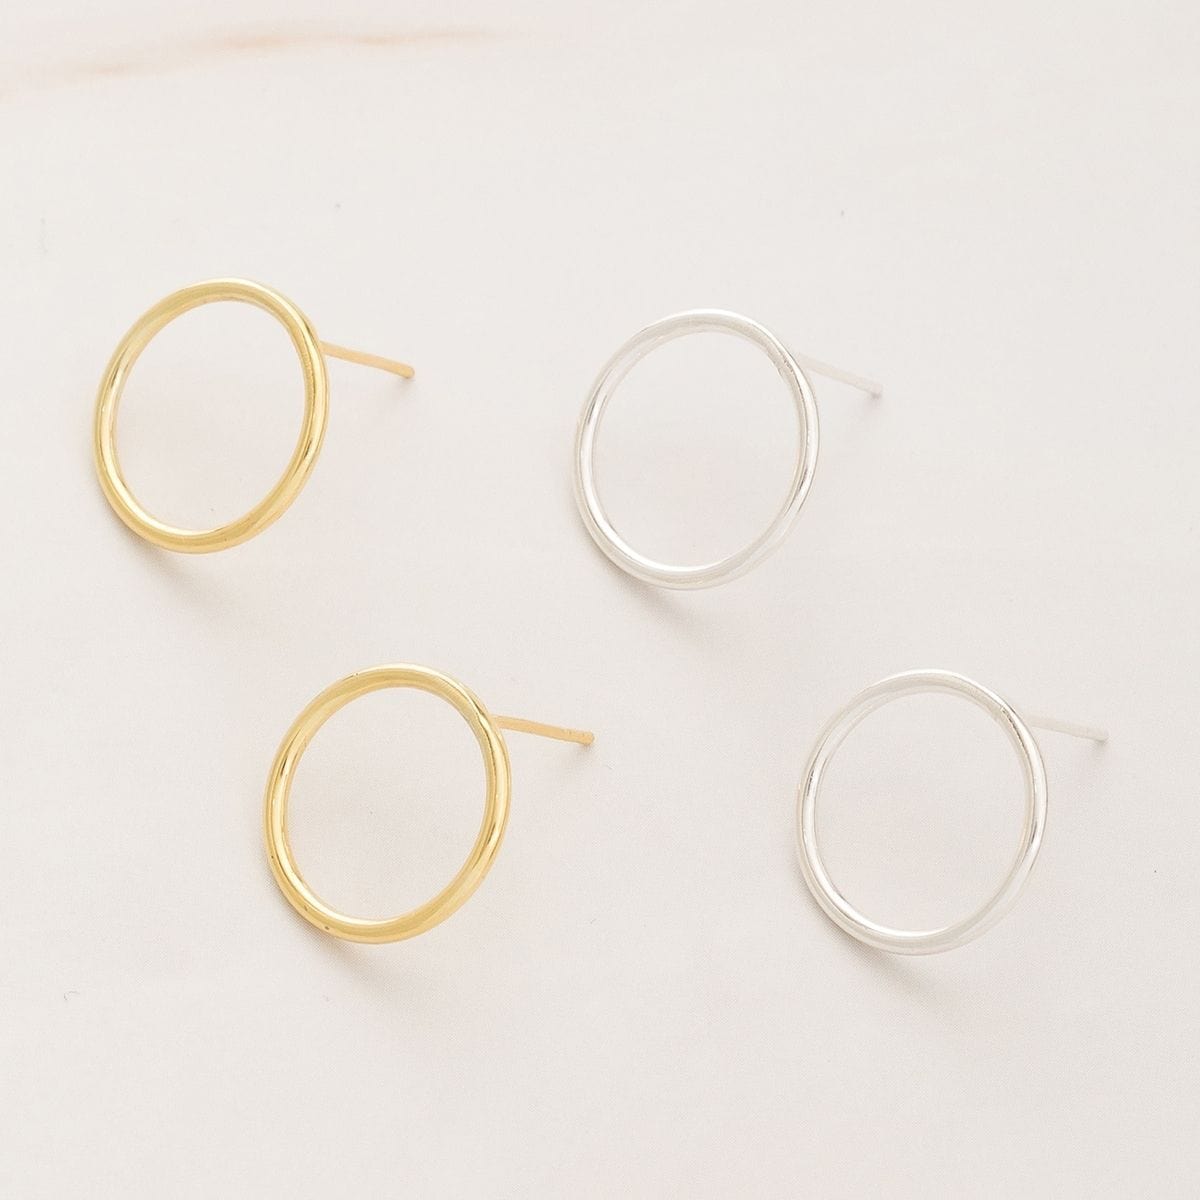 Emblem Jewelry Earrings Modern Geometry Circle Stud Earrings